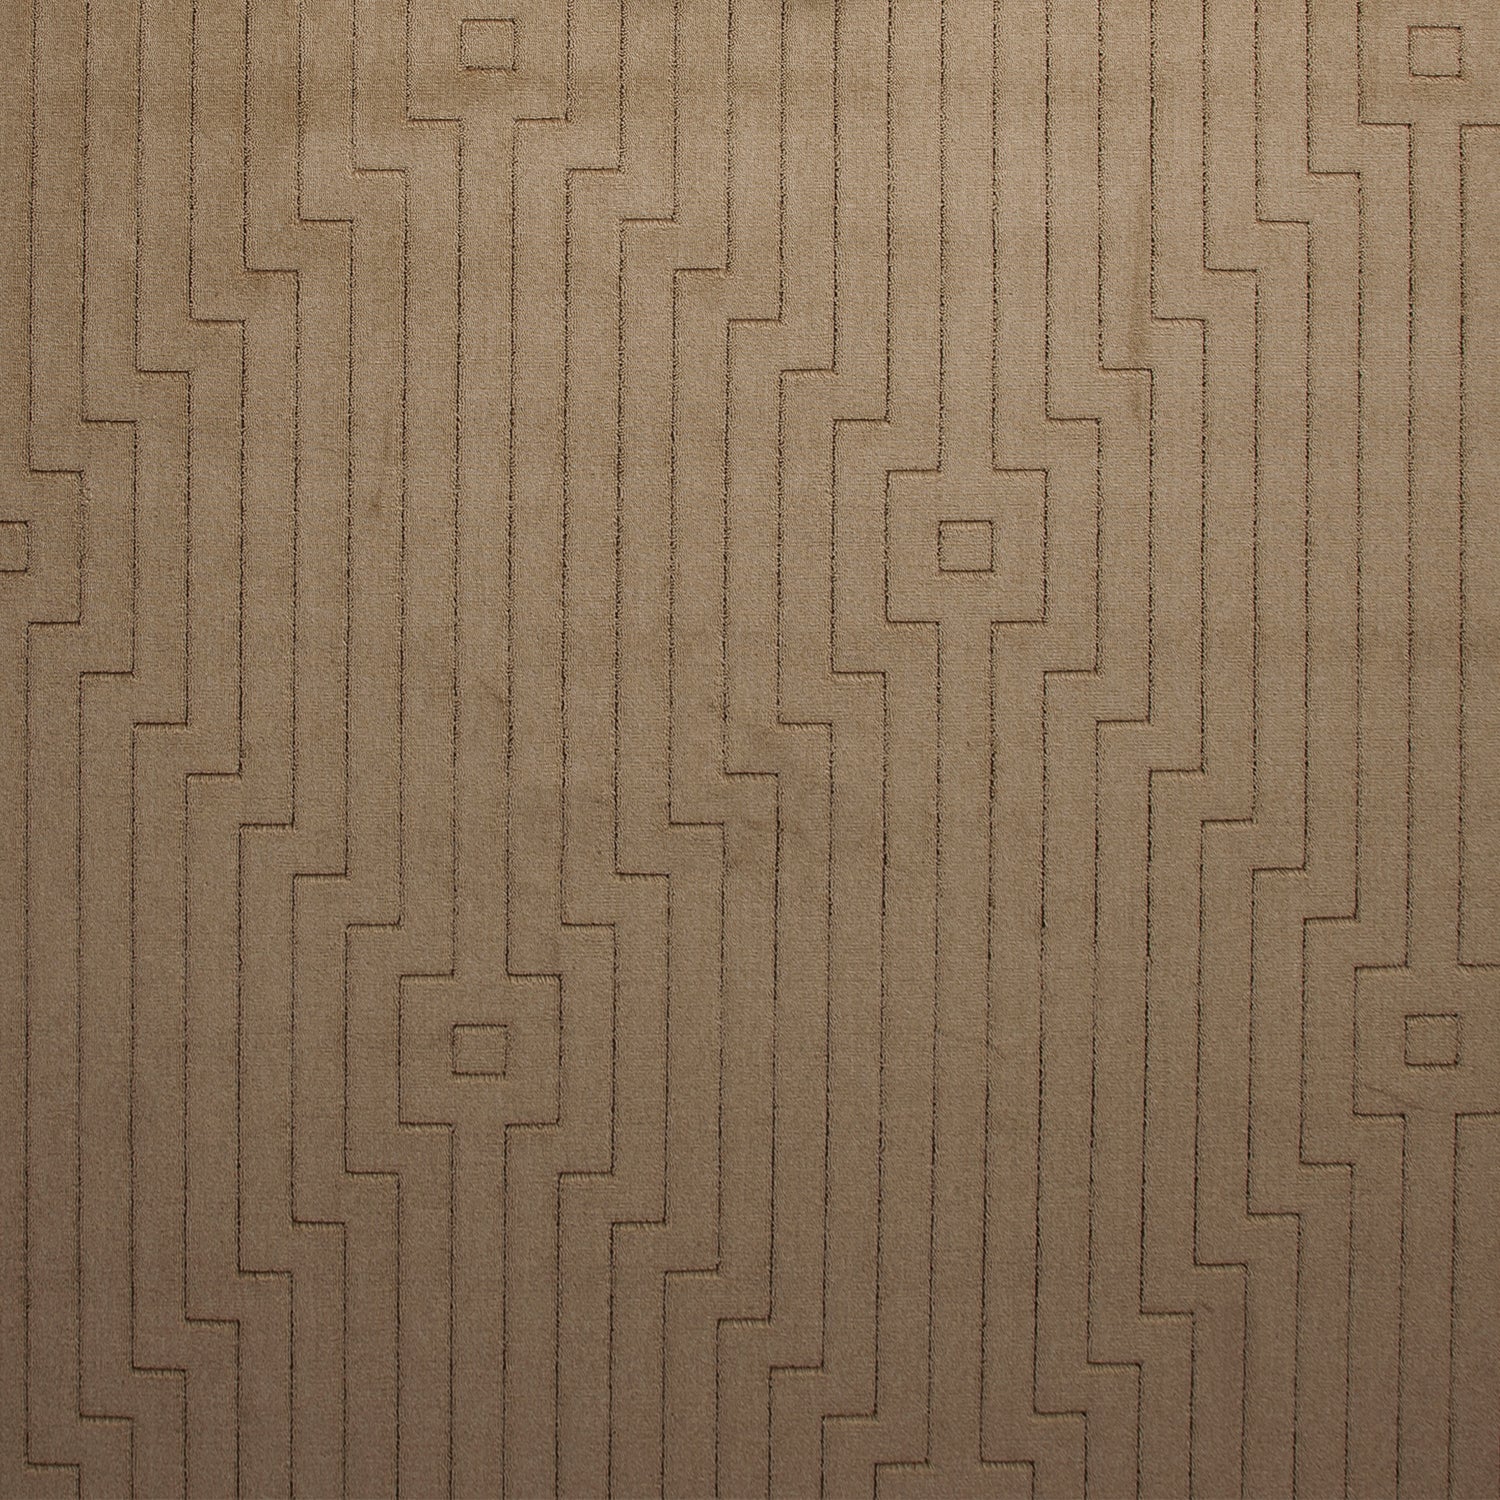 Wool-silk broadloom carpet swatch in a dimensional geometric weave in gold.